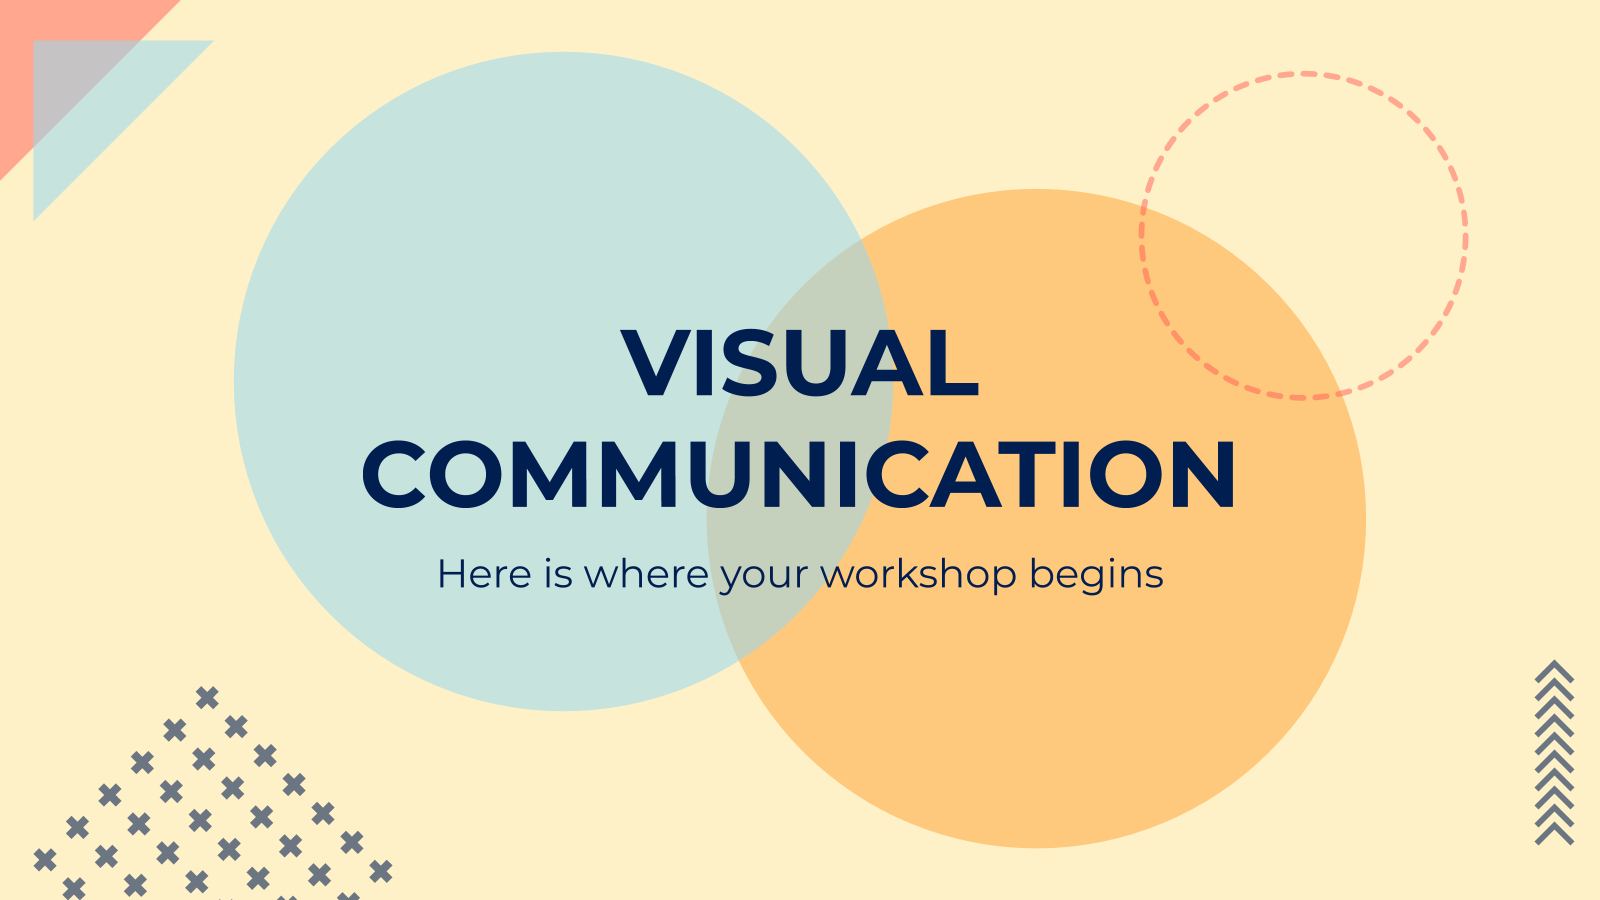 Visual Communication Workshop Google Slides Theme And Inside Powerpoint Templates For Communication Presentation